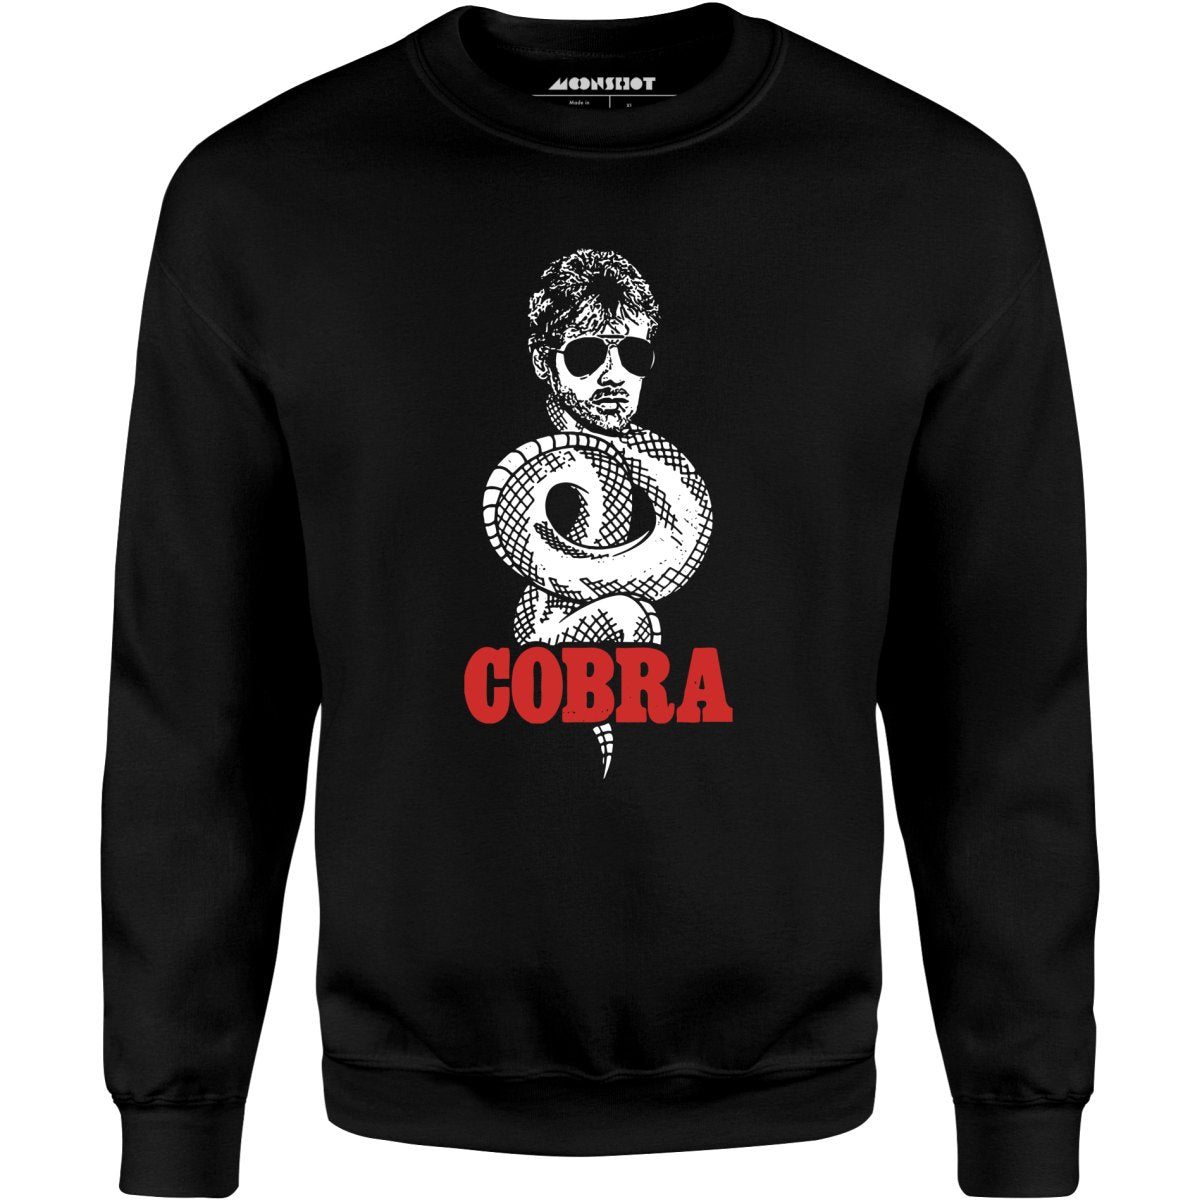 Cobra - Unisex Sweatshirt